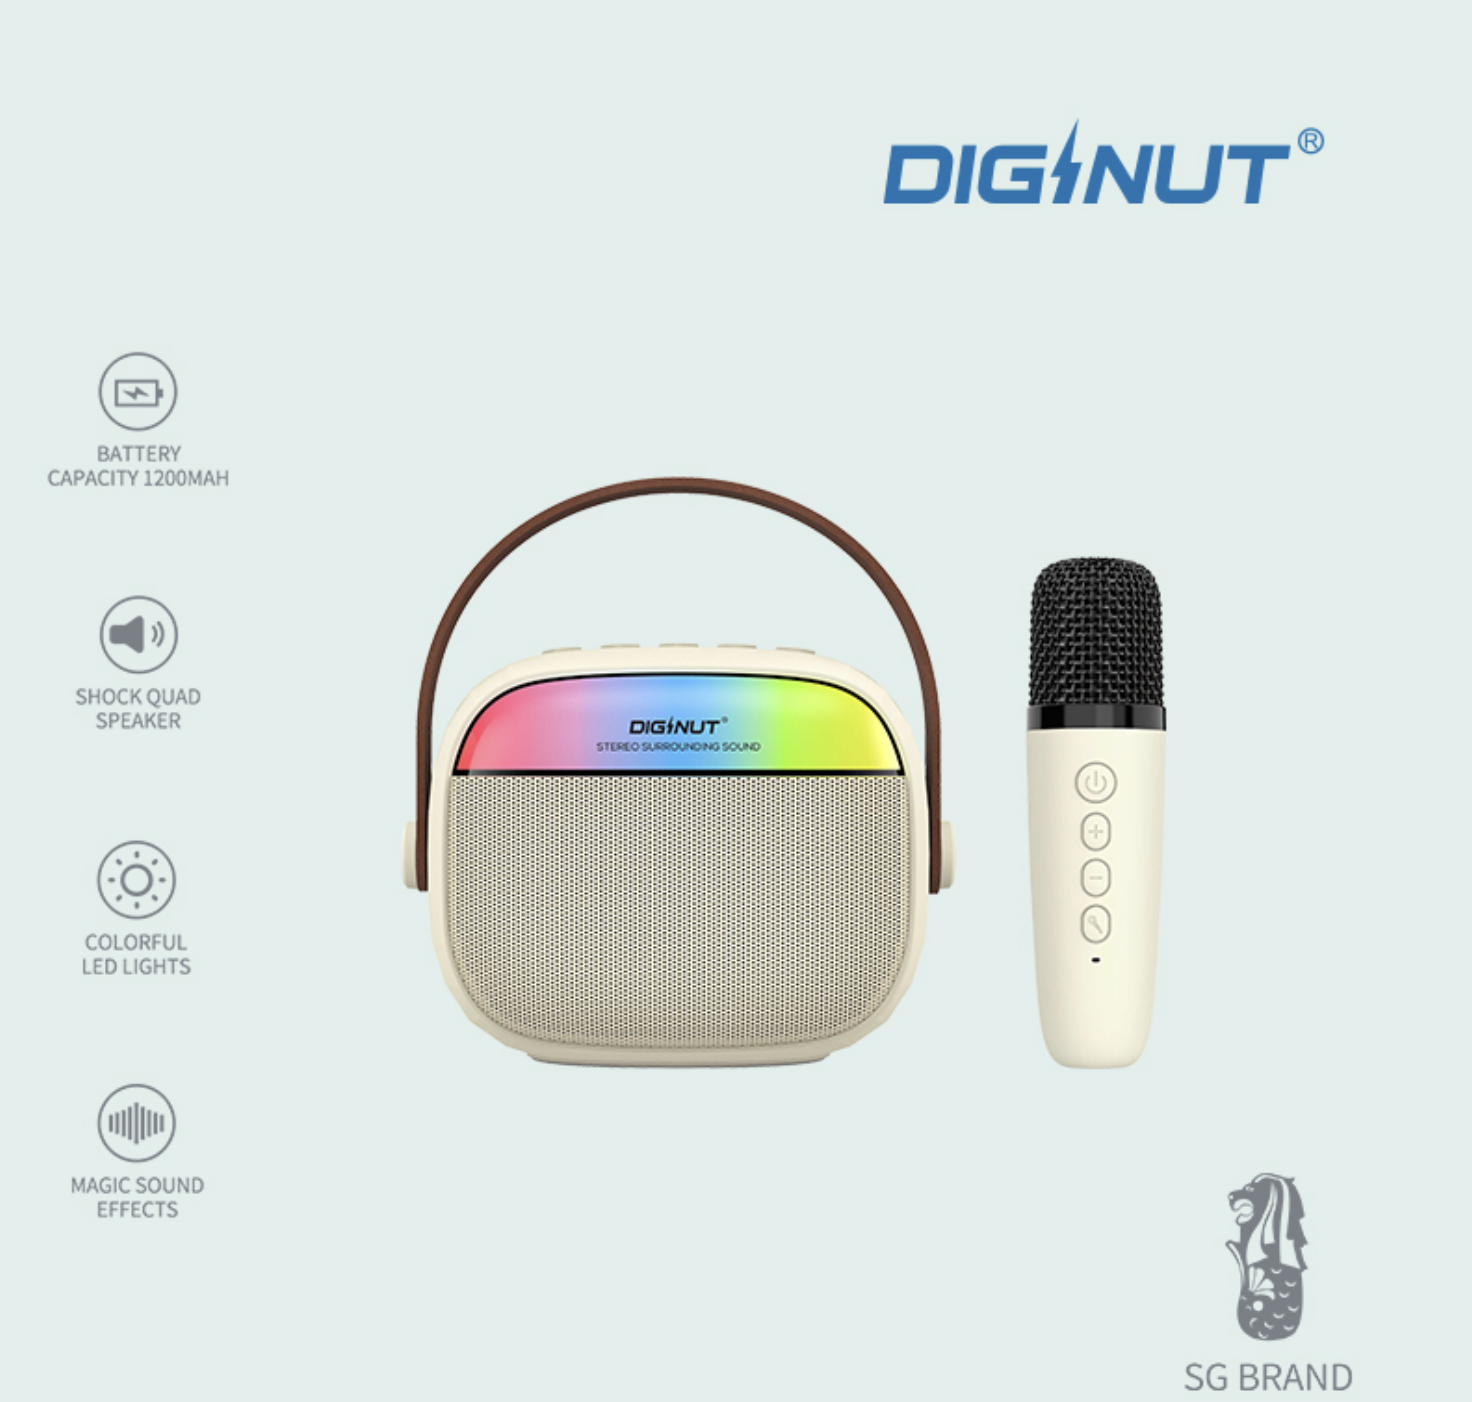 Diginut DK-210 Mini Karaoke Bluetooth Speaker Beige White/ Colorful LED Lights/ Cancel Original Sound/Karaoke